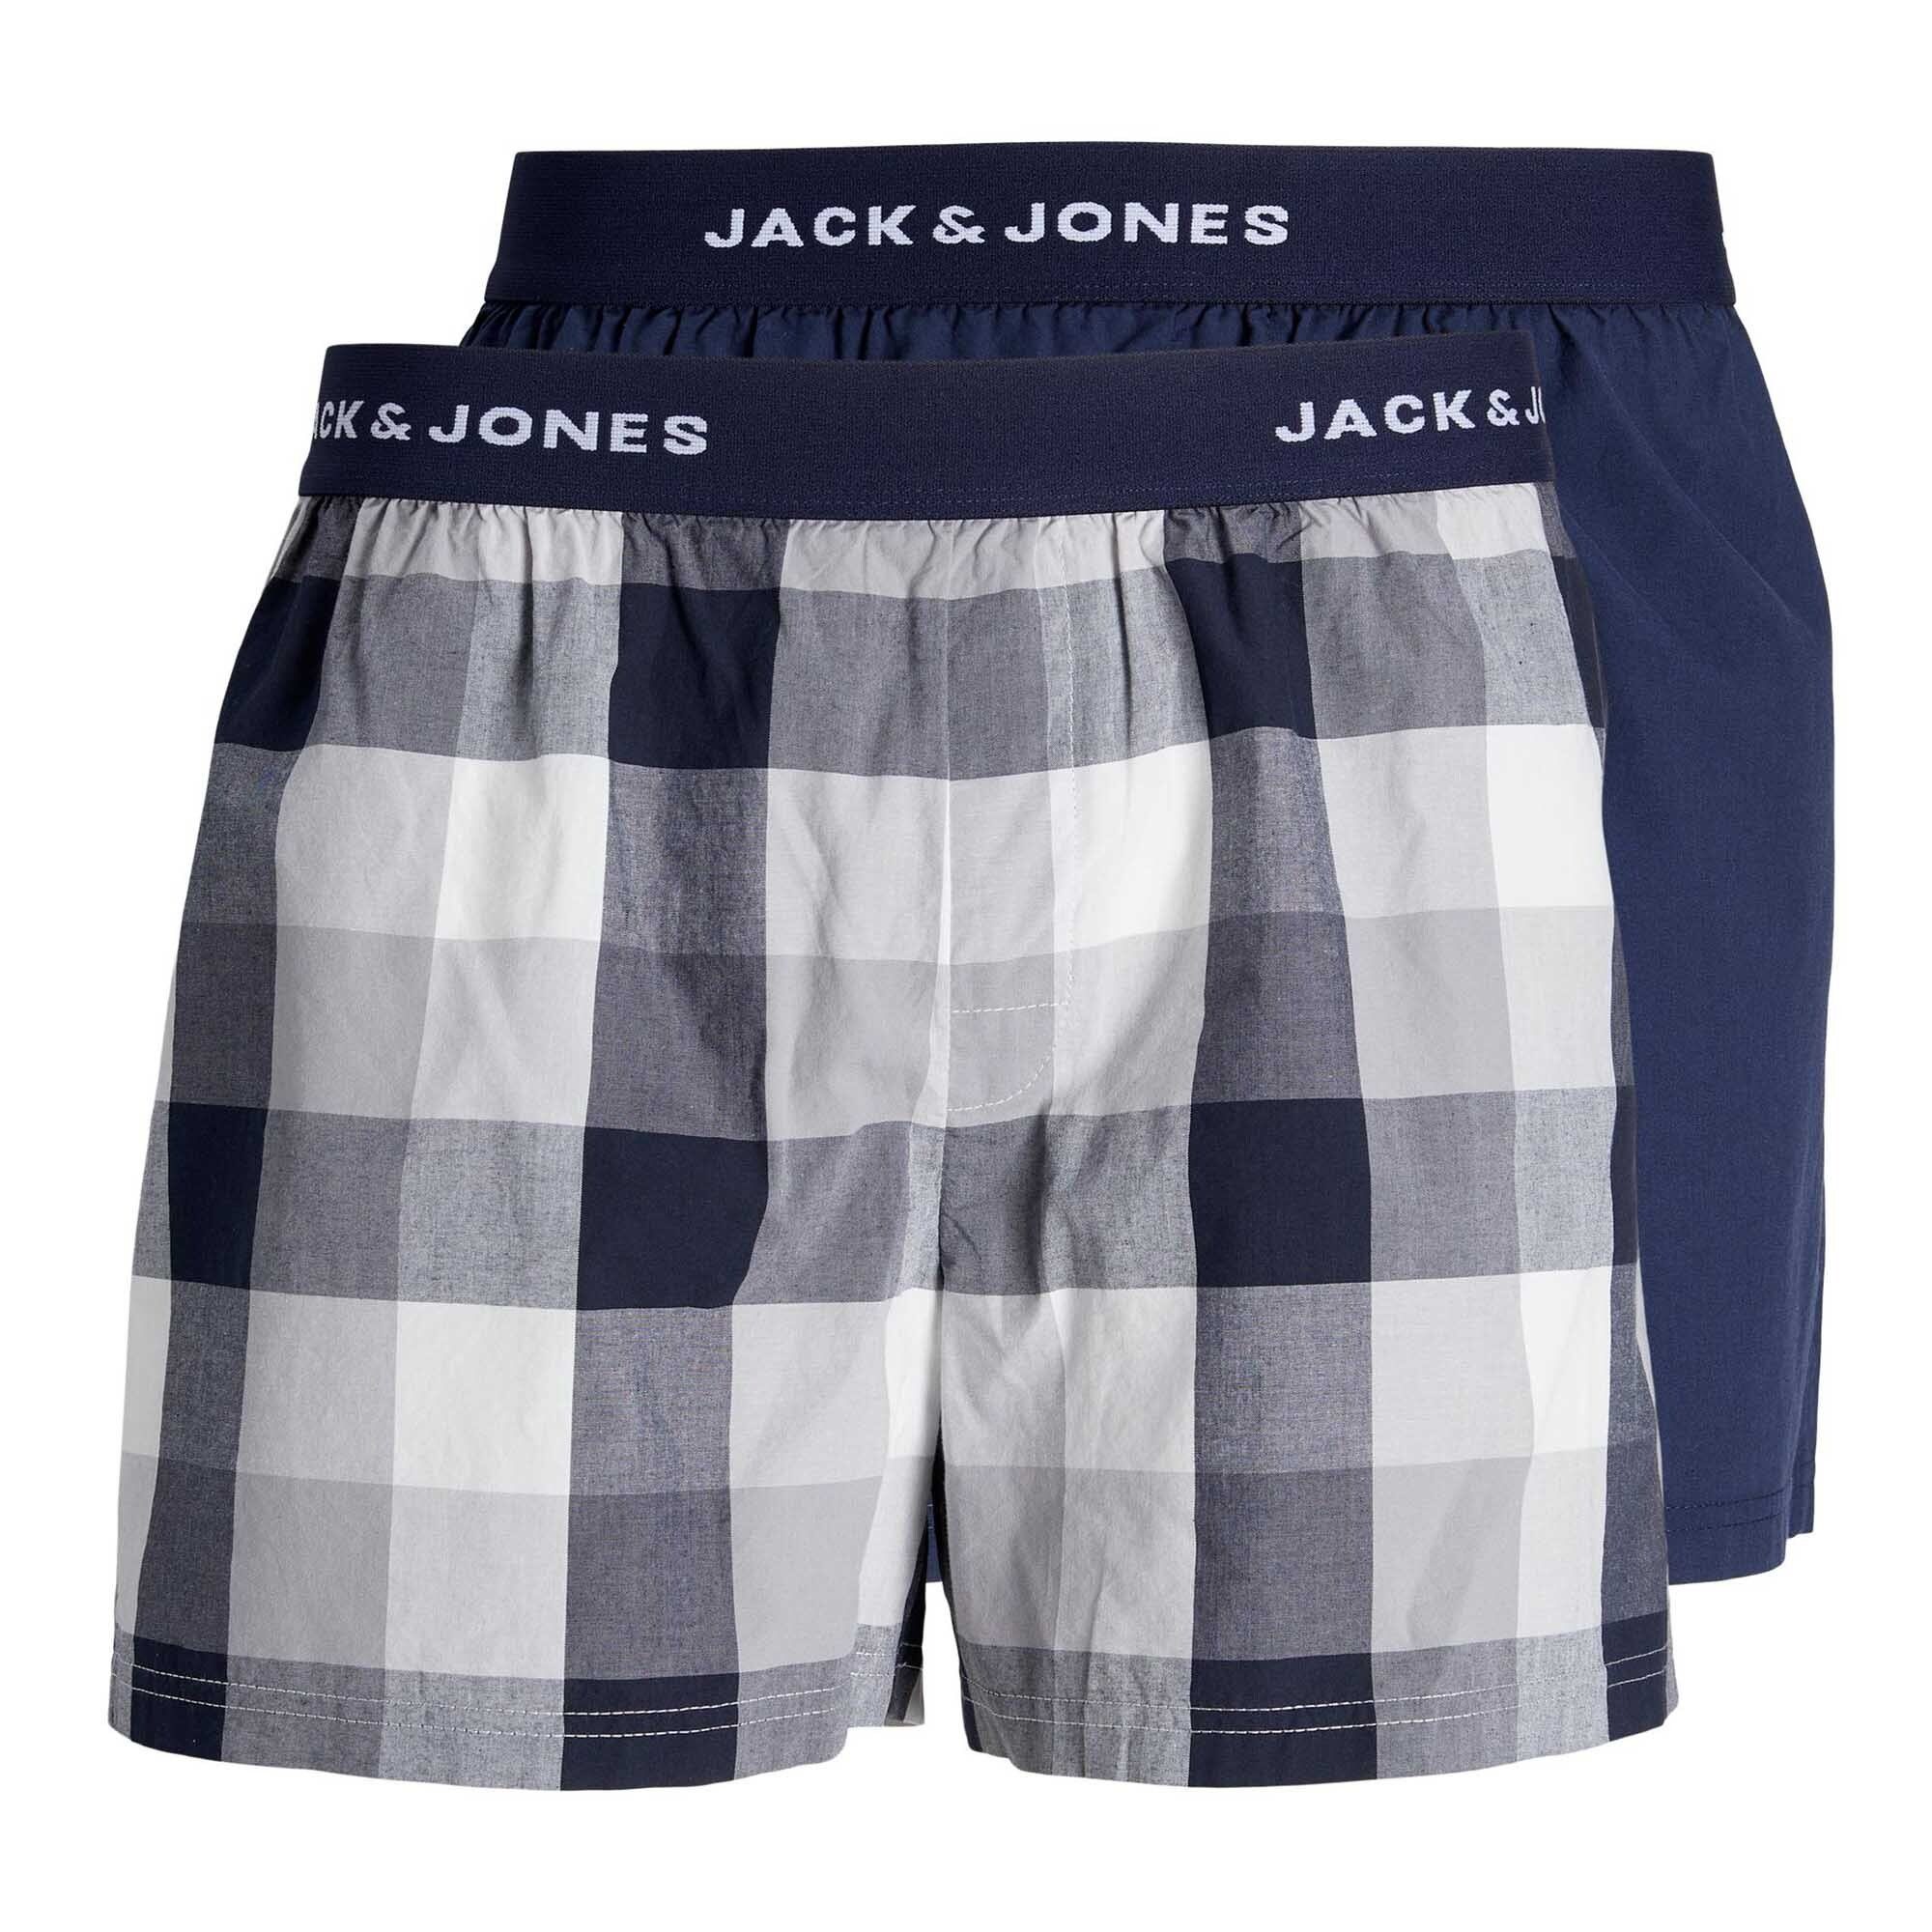 Boxershorts 2er Jack - Pack & Web-Boxershorts JACLUCA Herren Jones CHECK